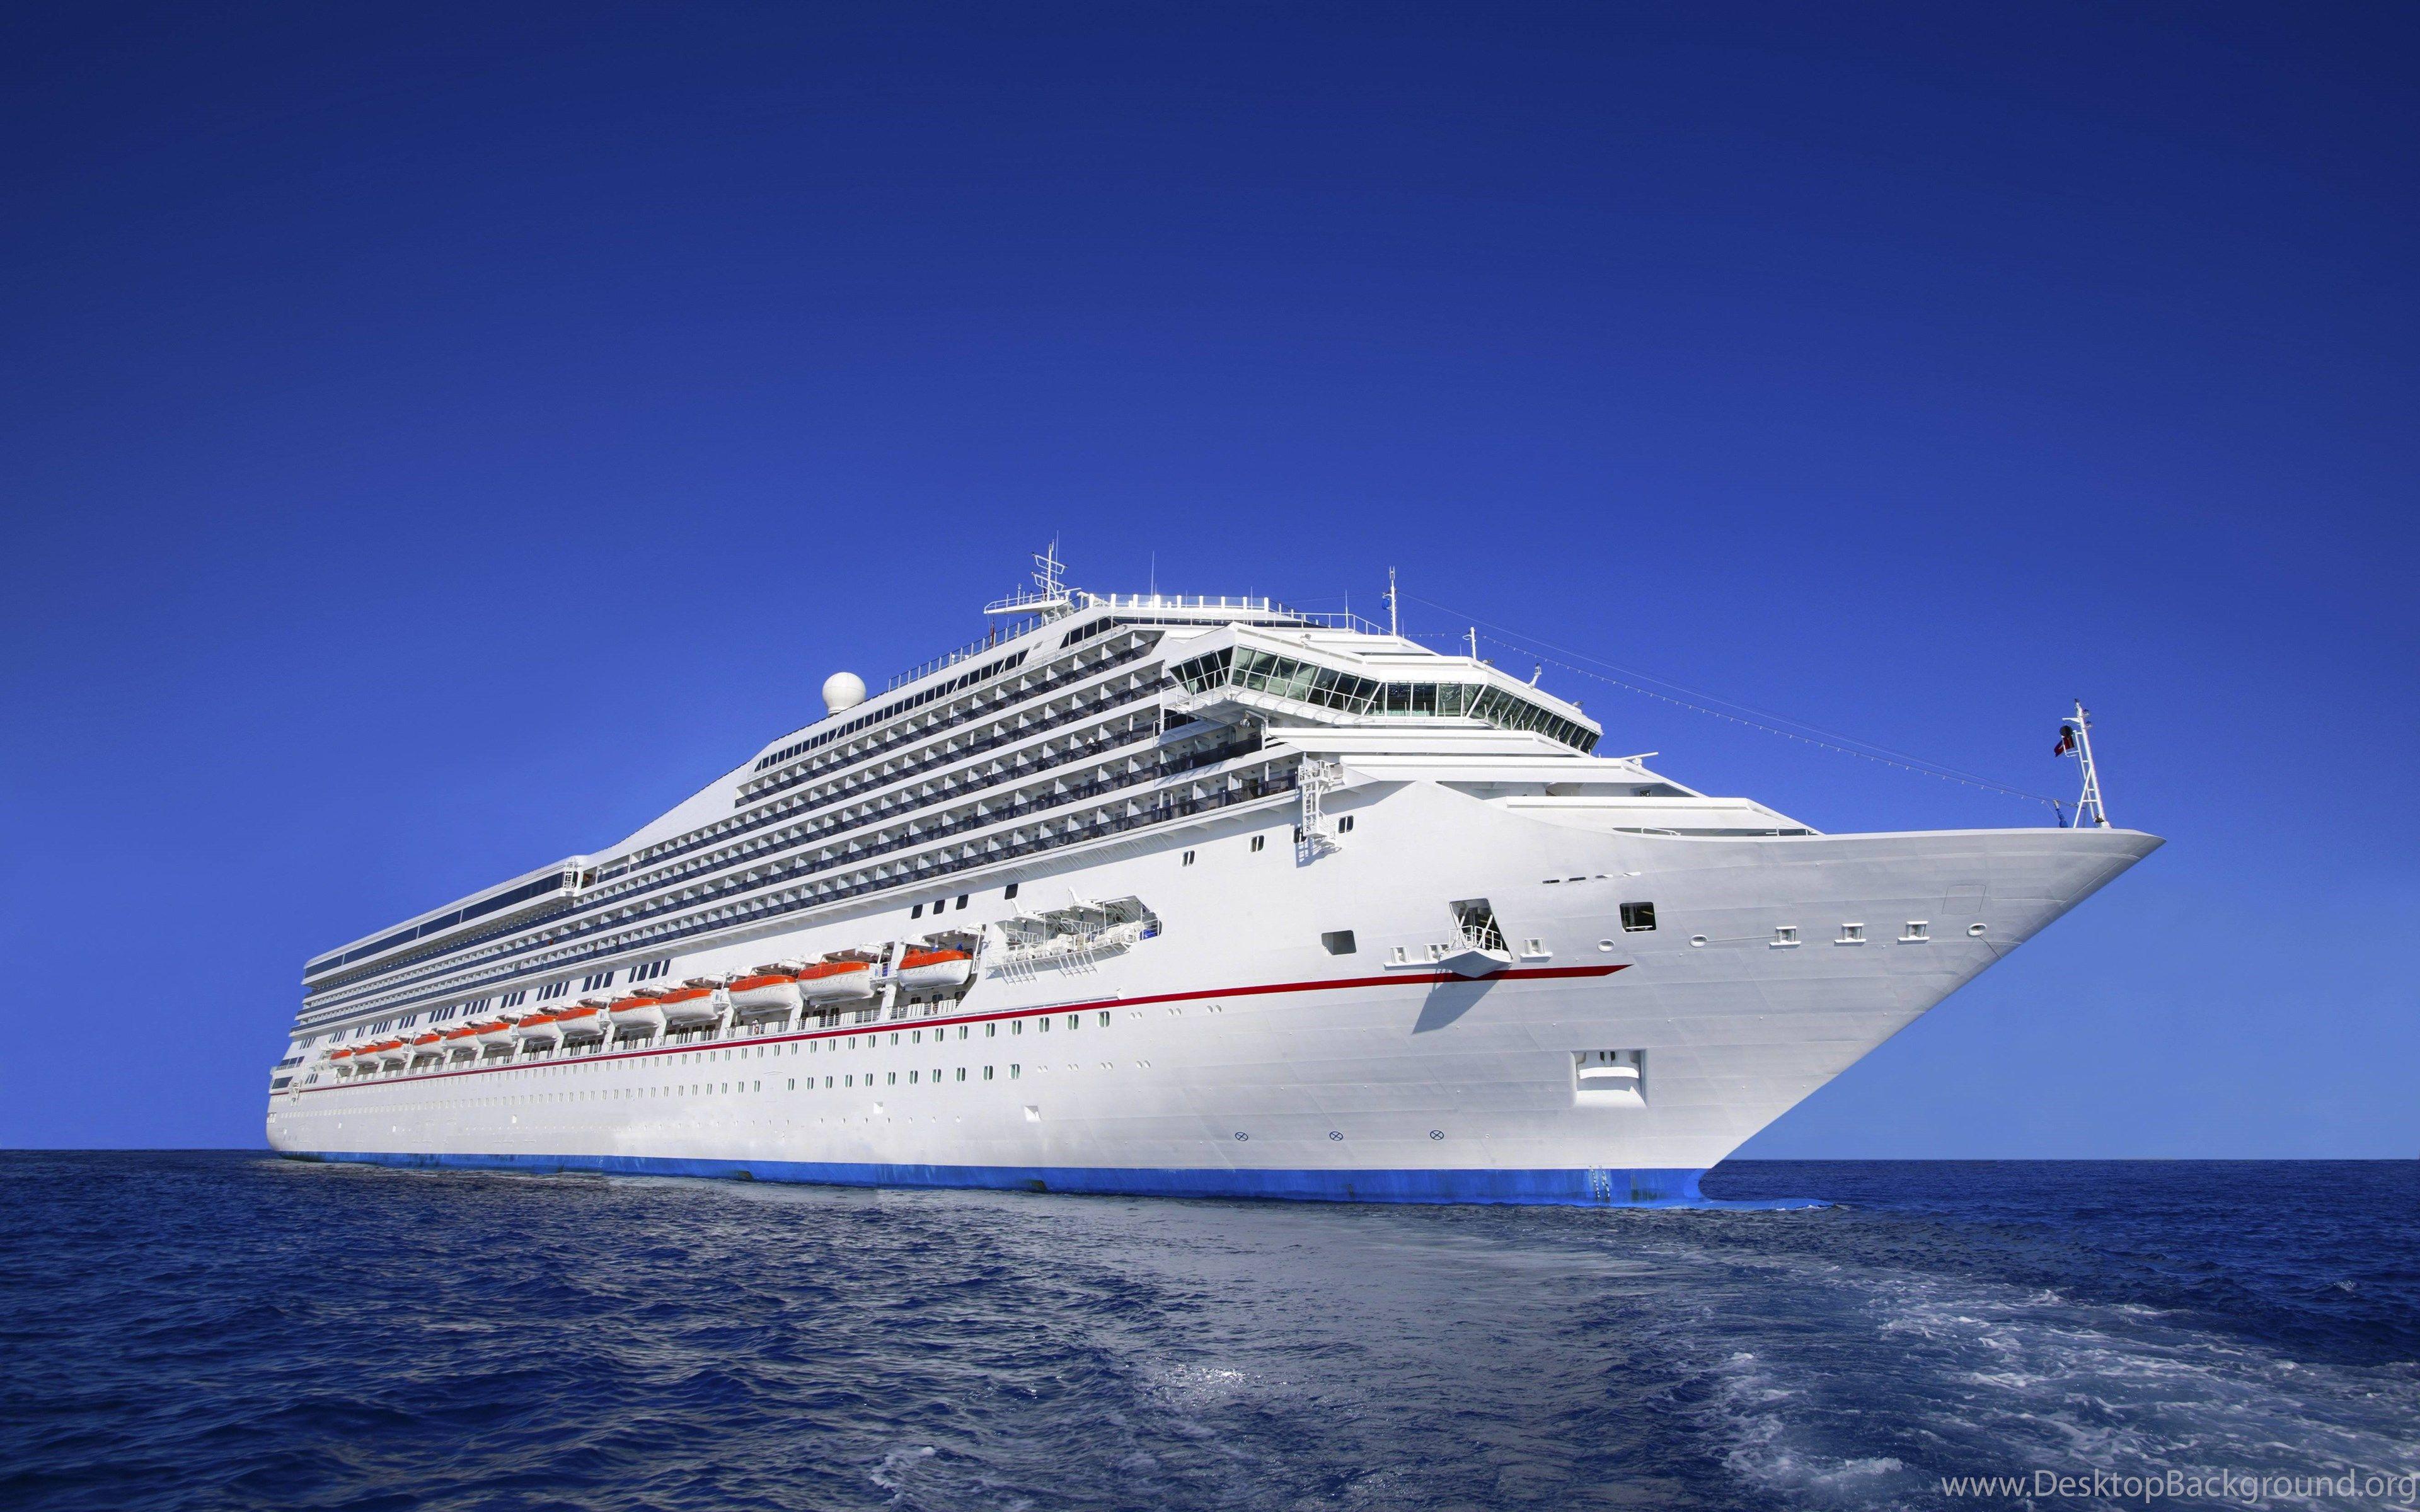 4K Ultra HD Cruise Ship Wallpapers - Top Free 4K Ultra HD Cruise Ship